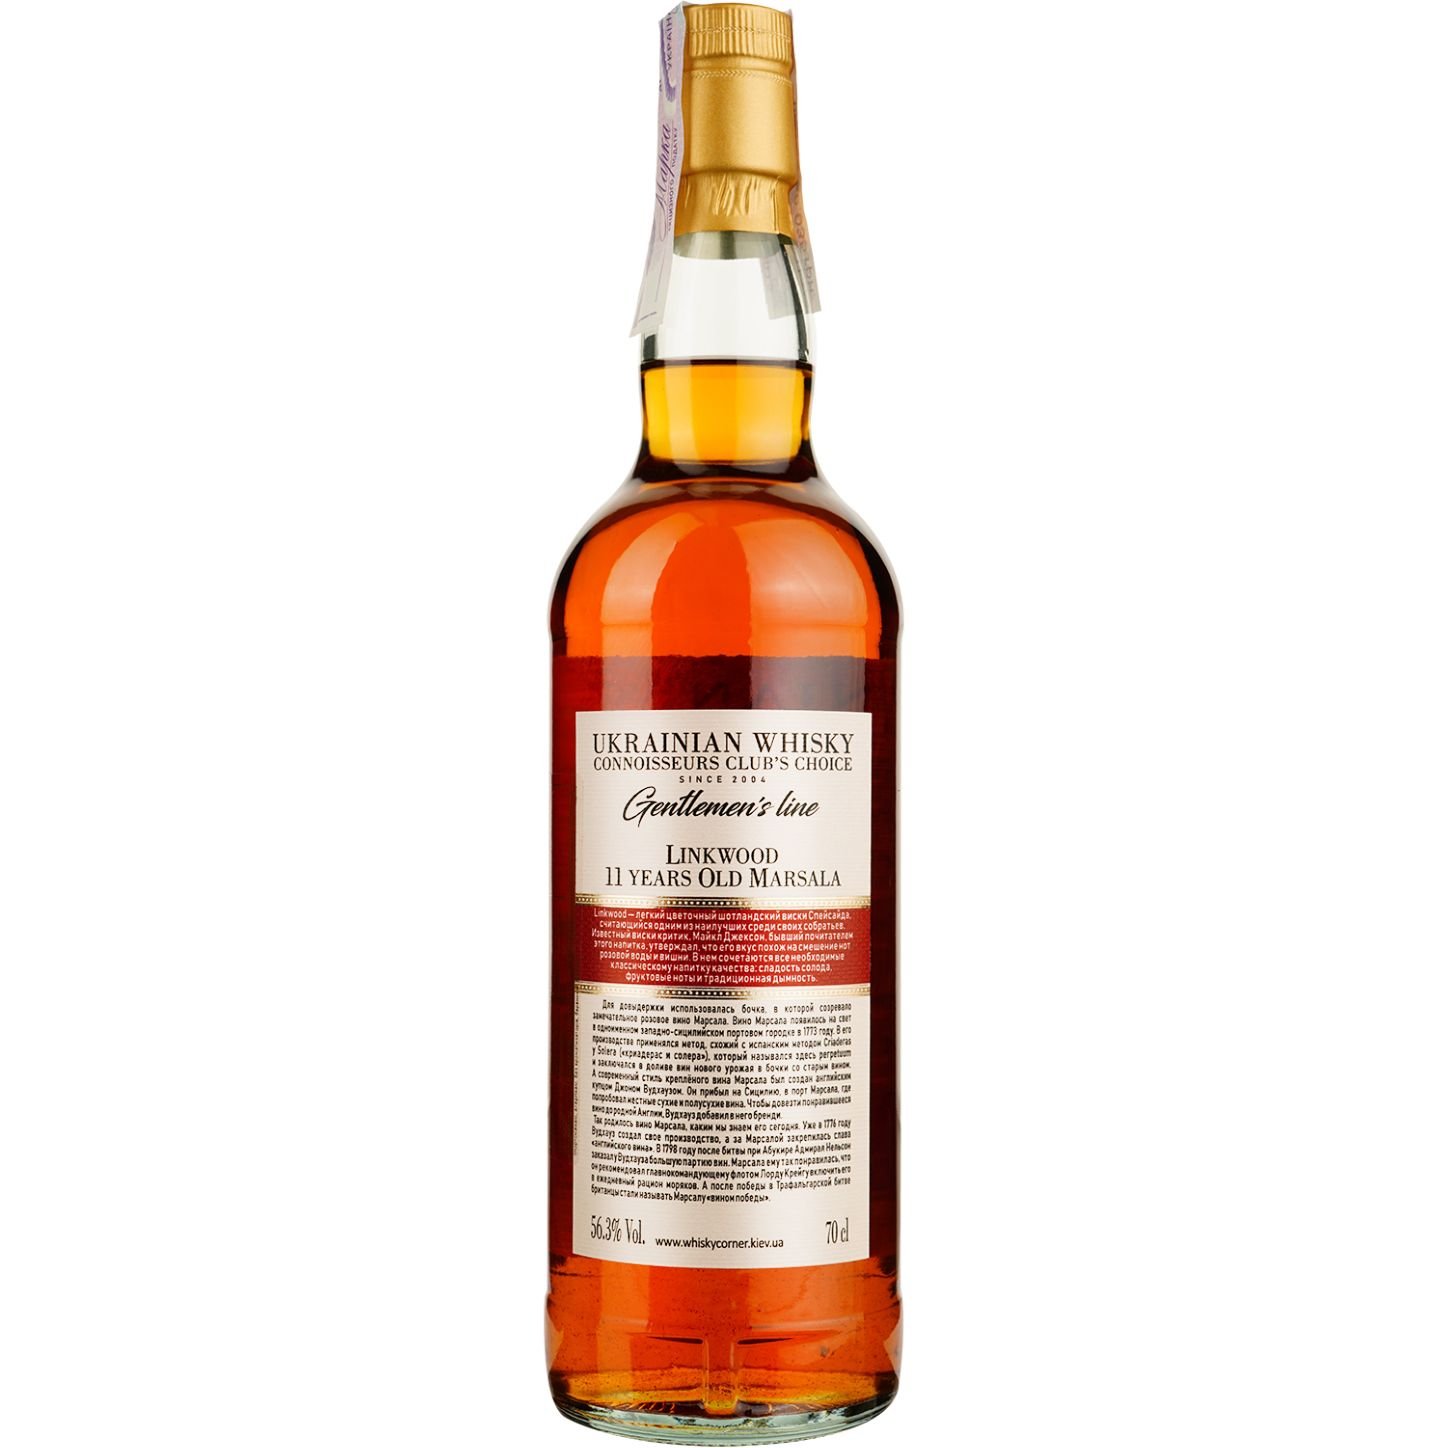 Виски Linkwood 11 Years Old Marsala Single Malt Scotch Whisky, в подарочной упаковке, 56,3%, 0,7 л - фото 4